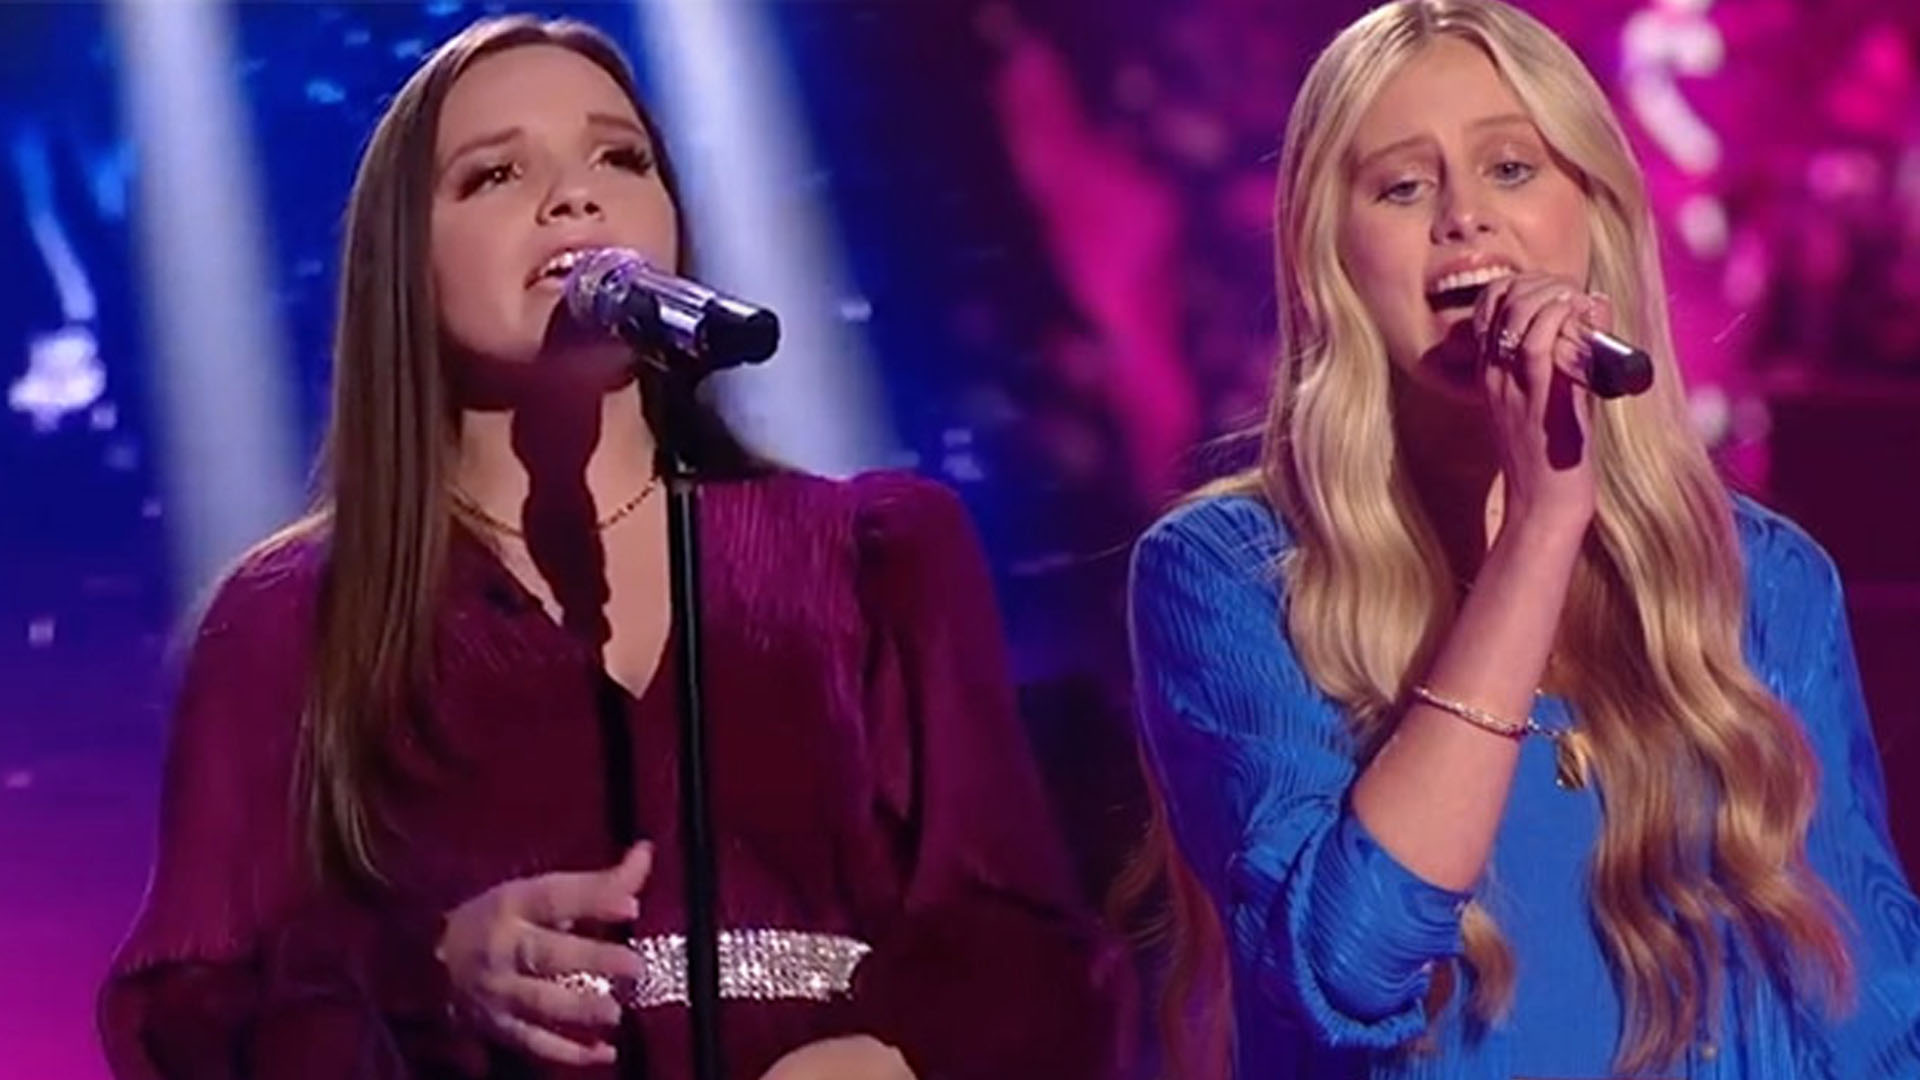 We're Loving the Christian Music On American Idol!